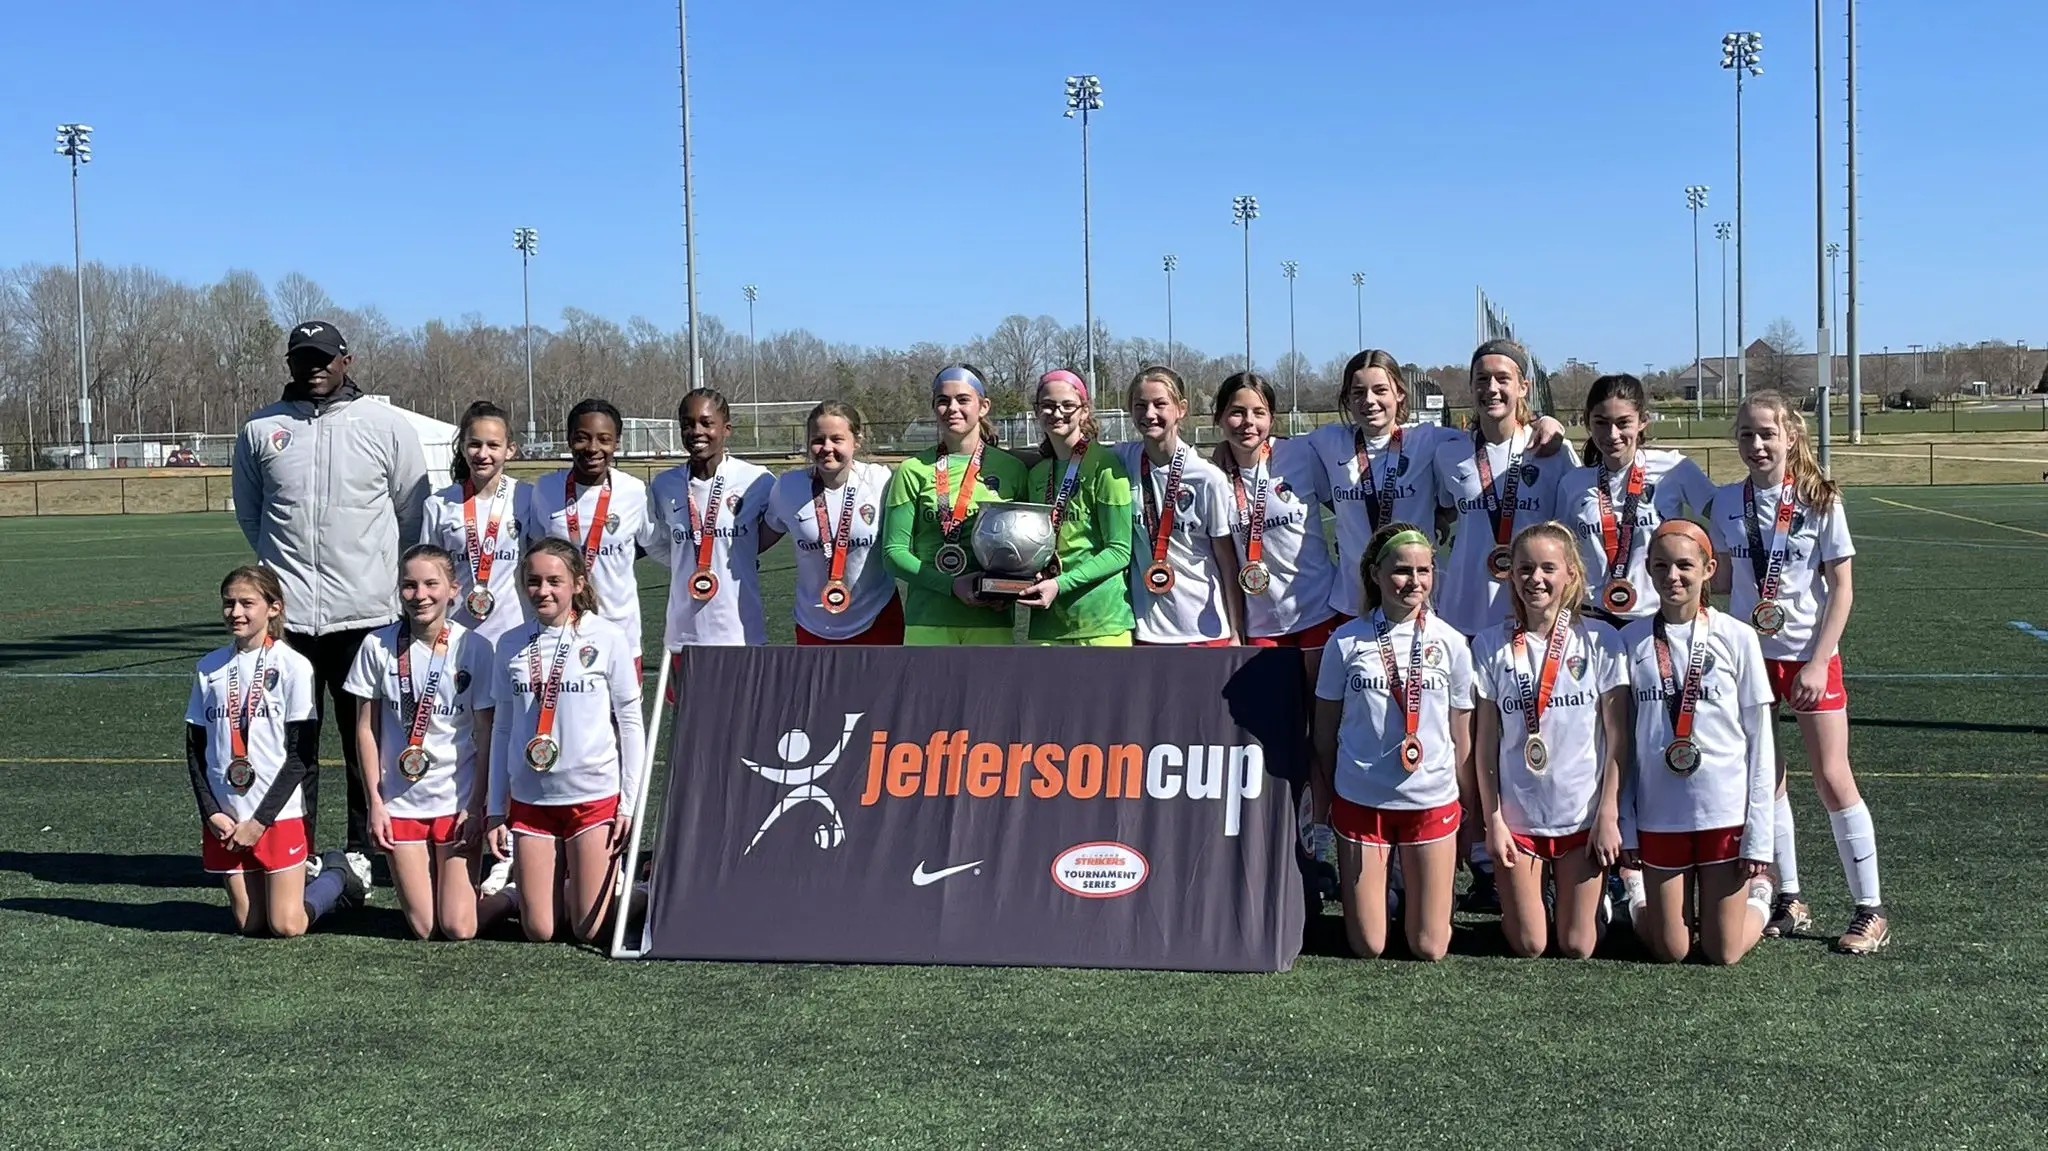 Jefferson Cup U9U14 Girls Weekend sees teams from 38 clubs win